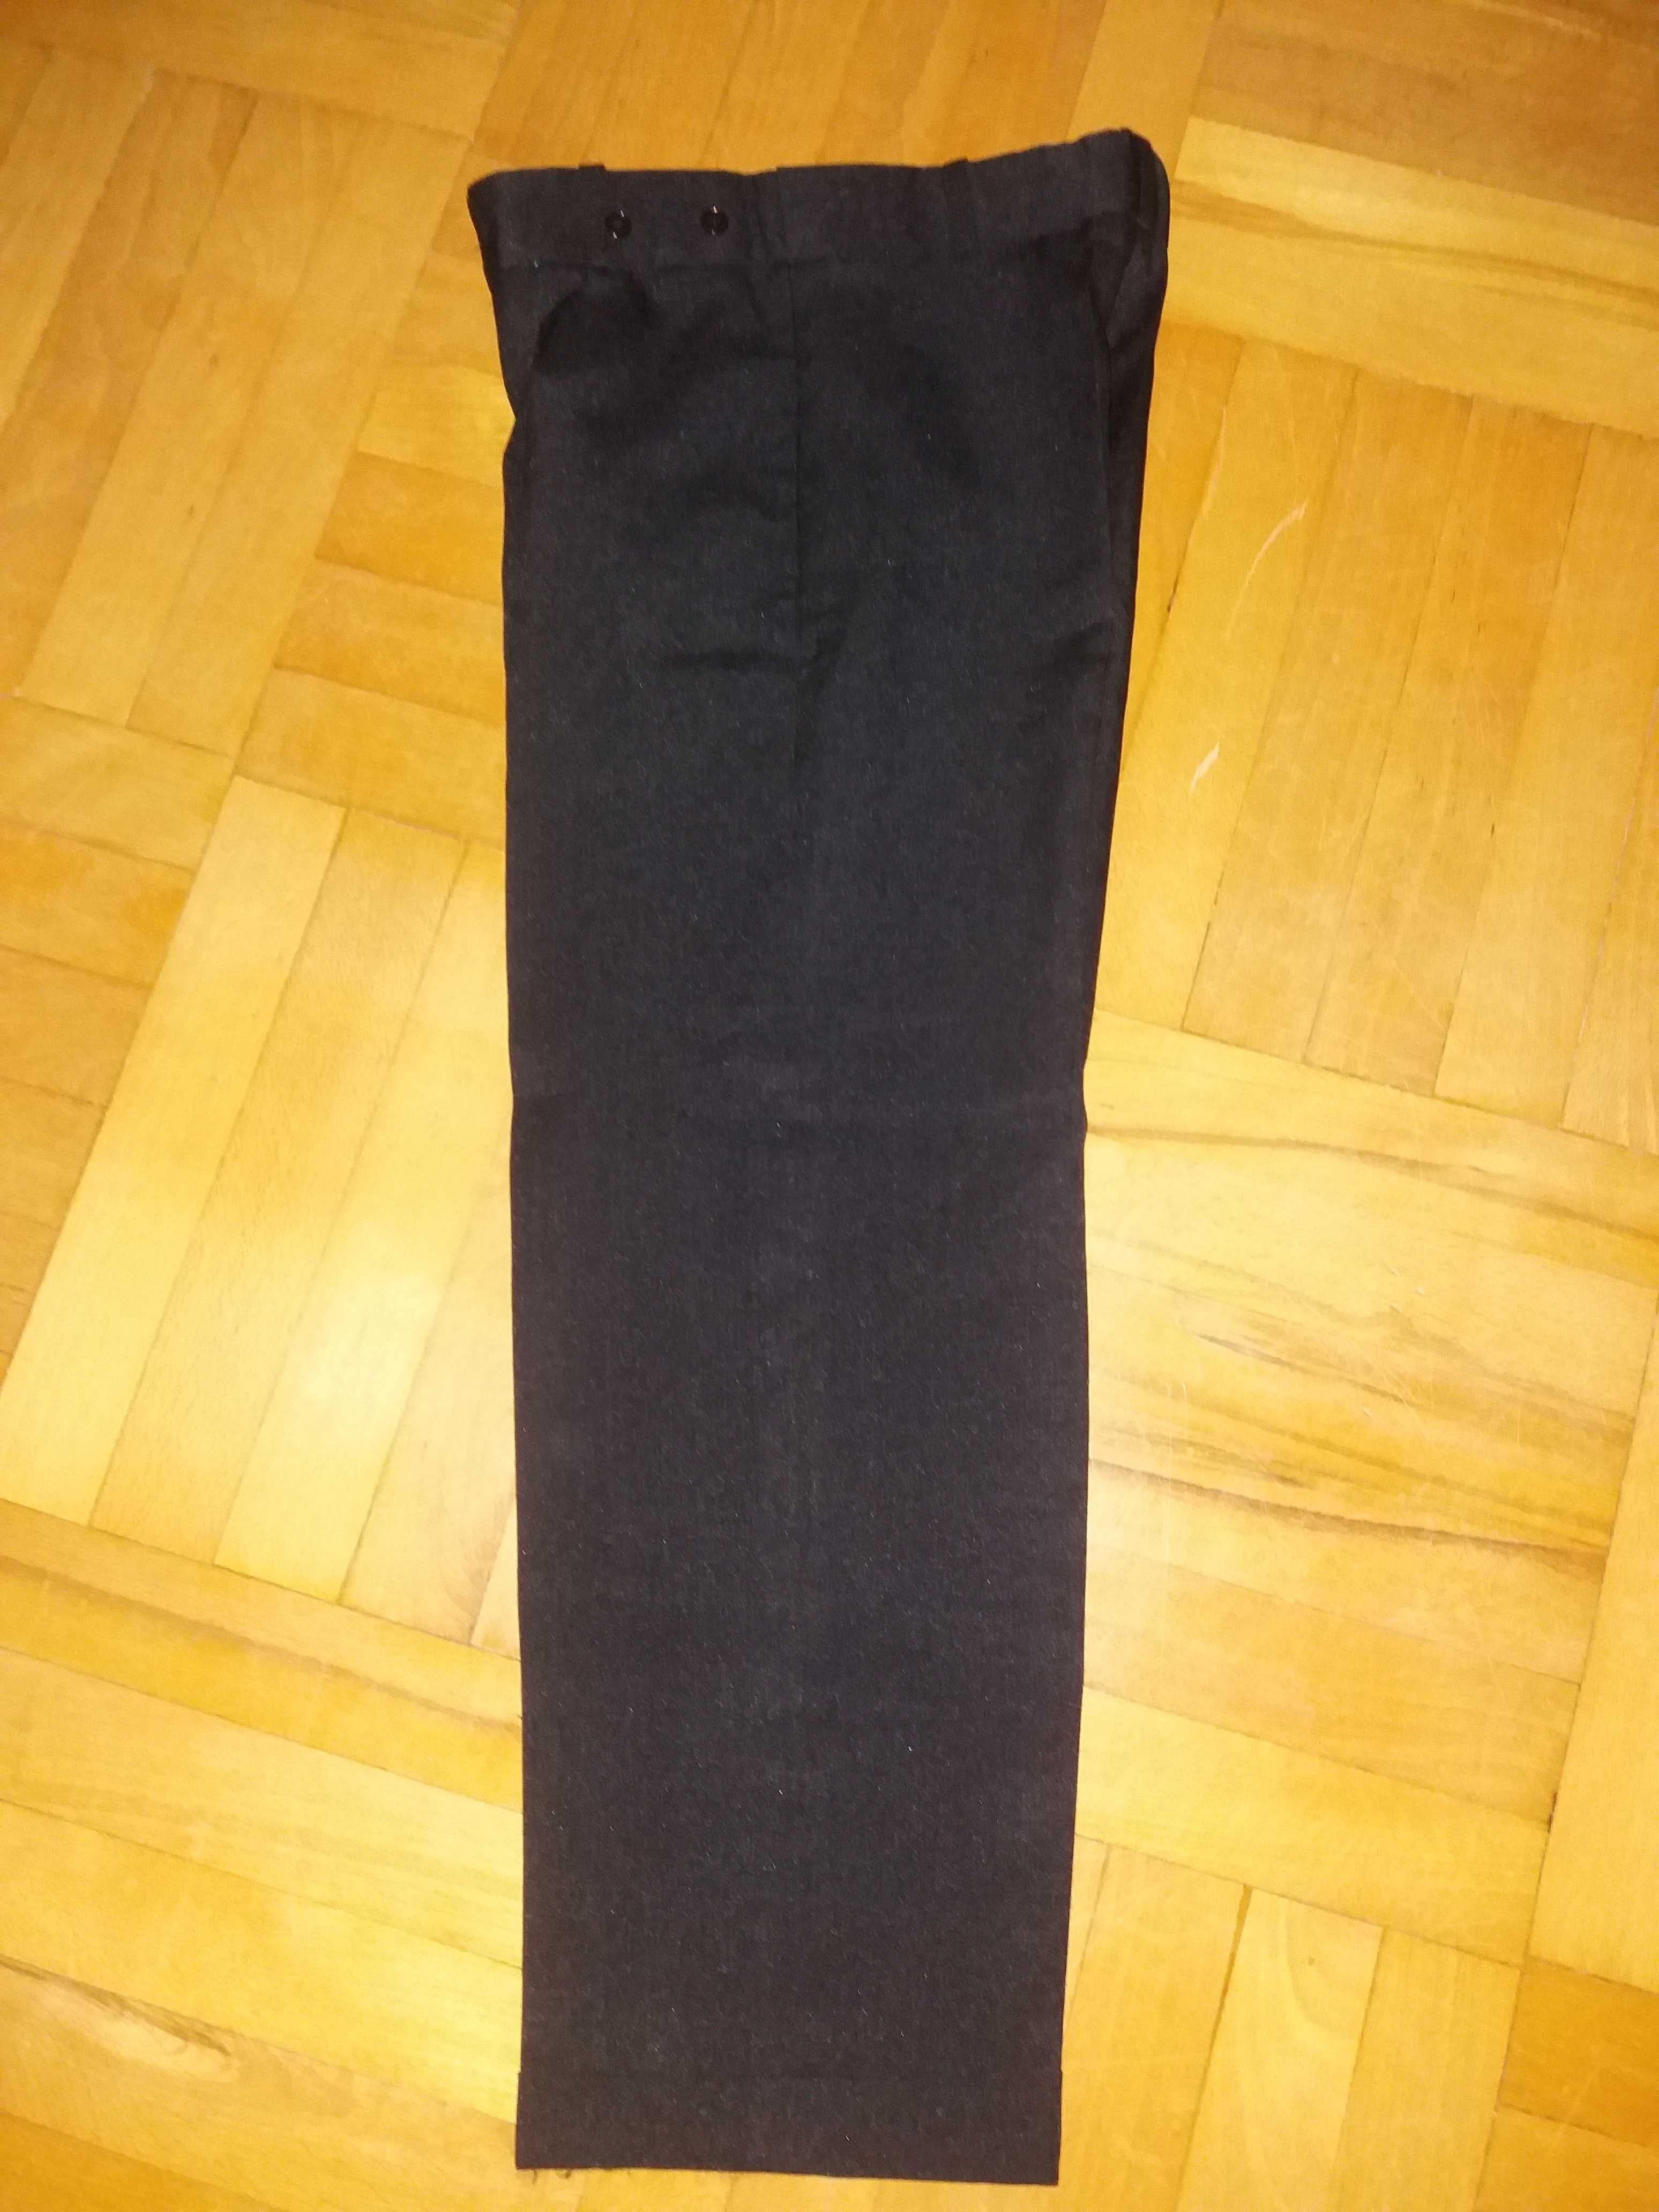 Spodnie czarne eleganckie komunijne 128/134